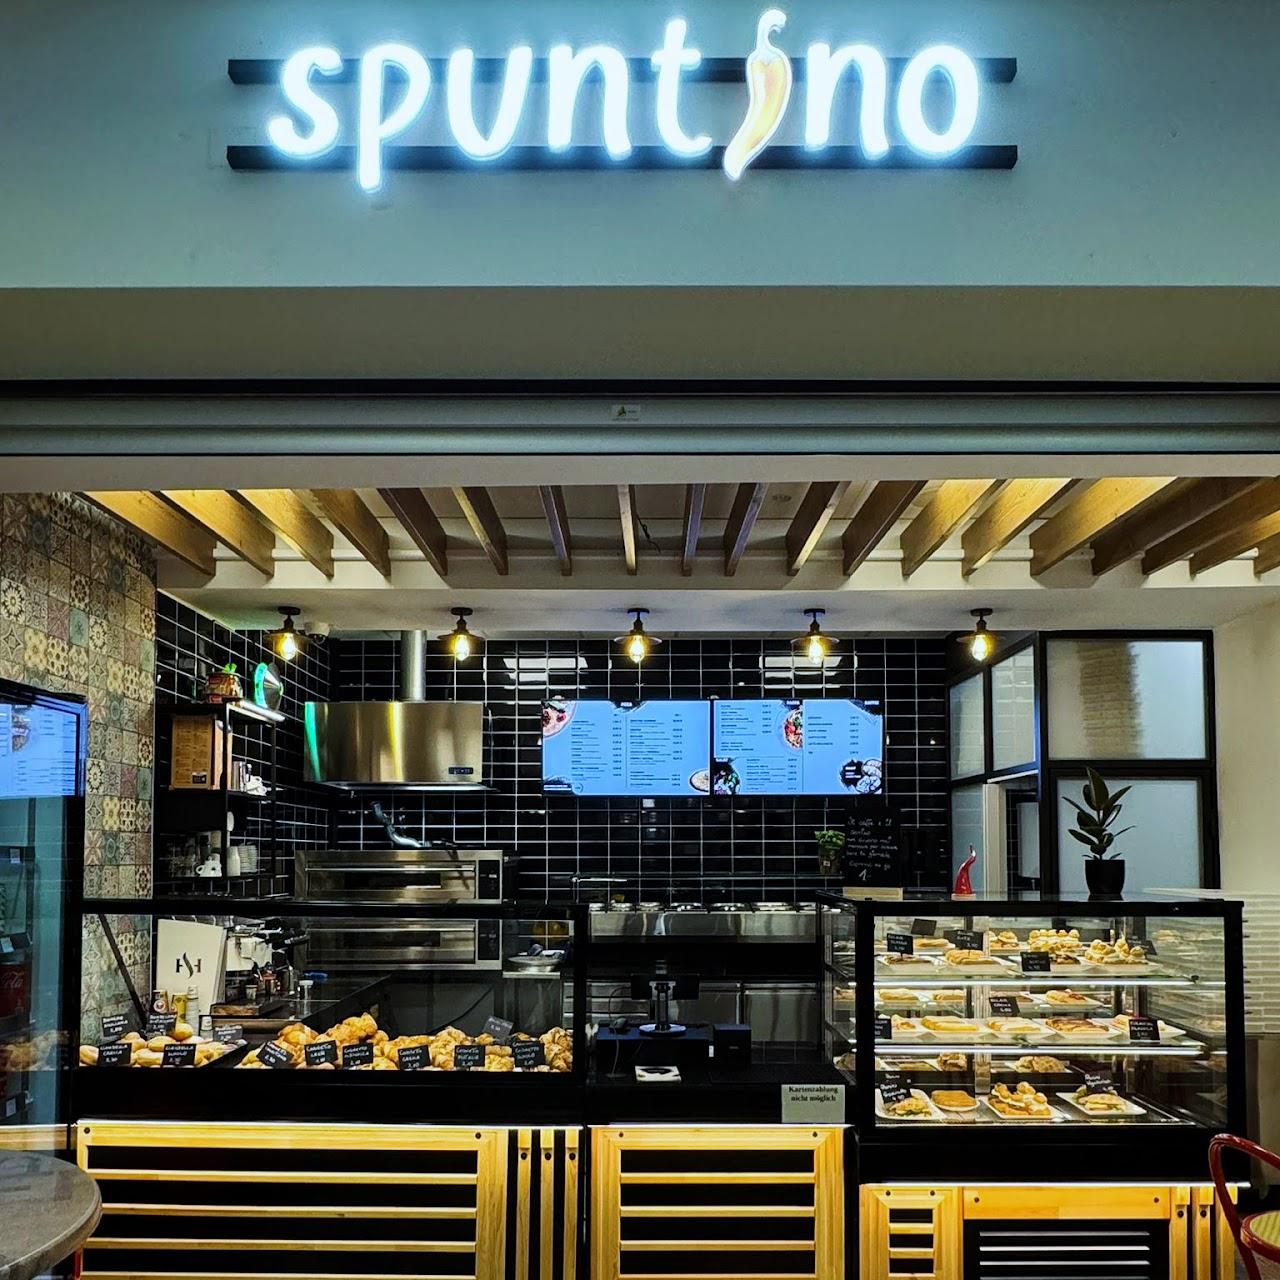 Restaurant "Spuntino" in Asperg